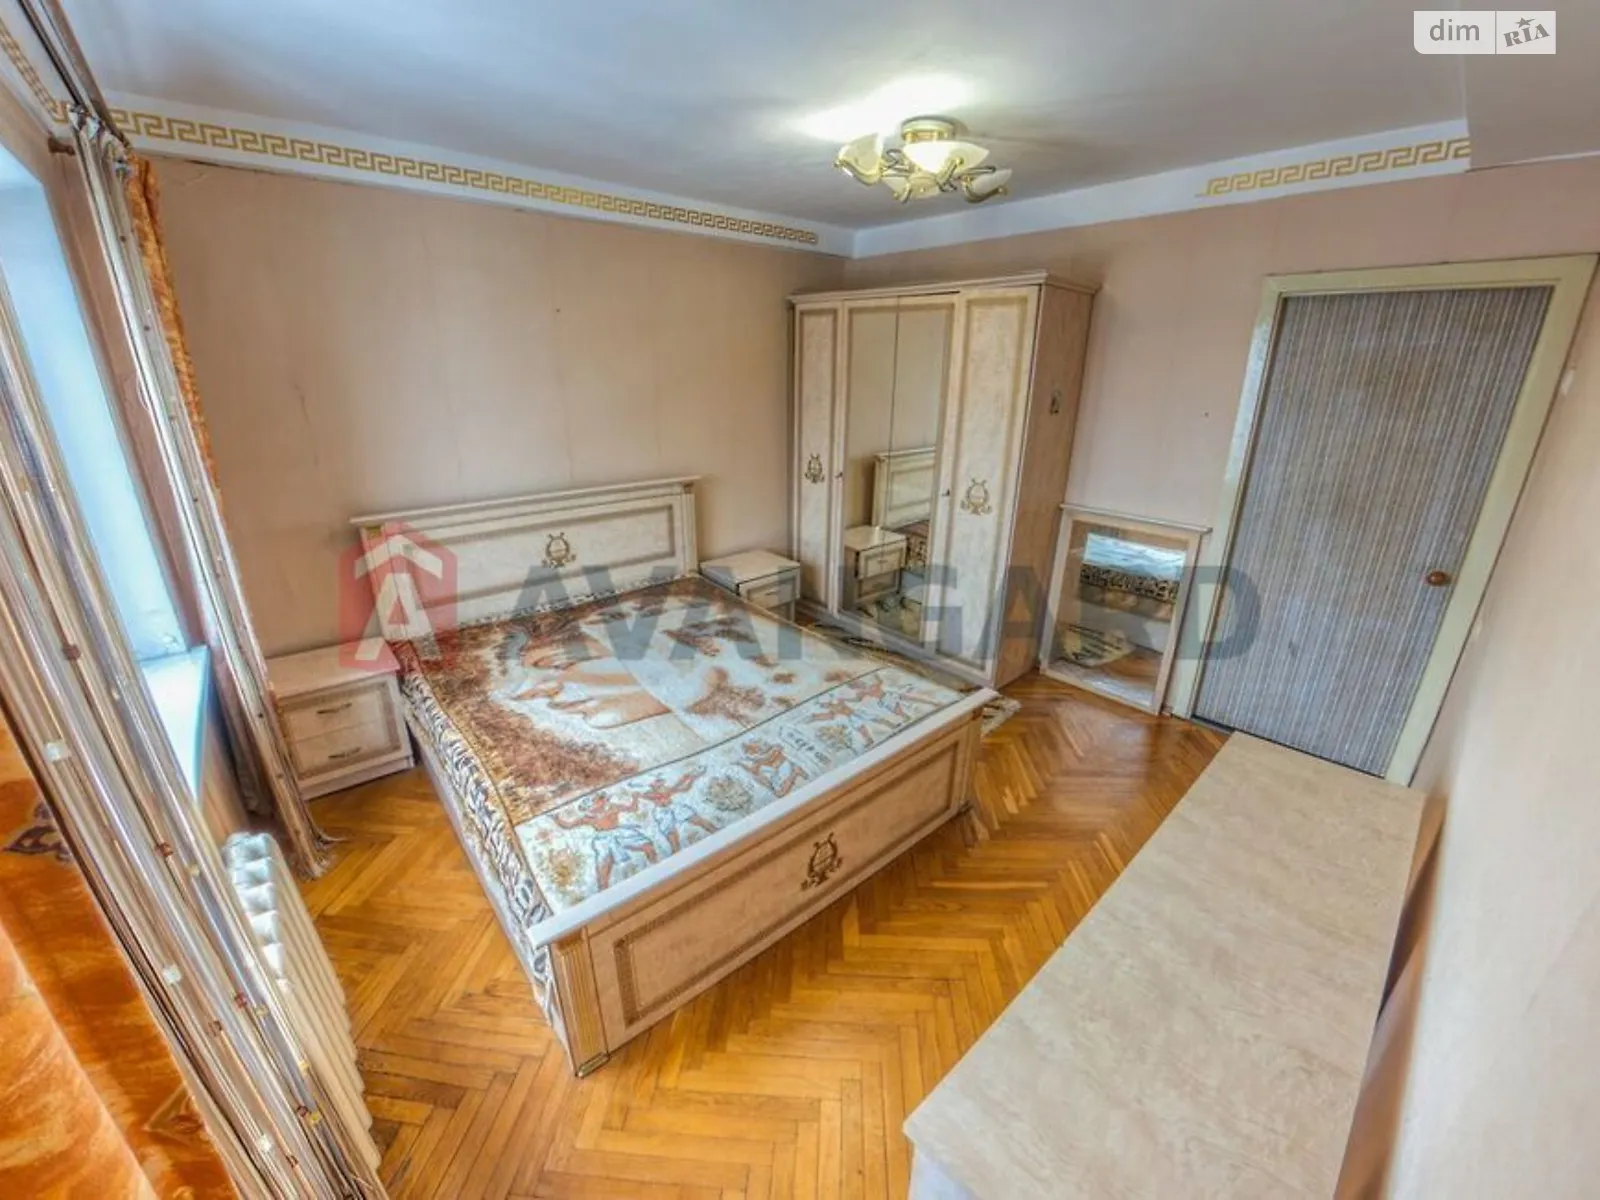 Продается комната 45 кв. м в Киеве, цена: 45000 $ - фото 1